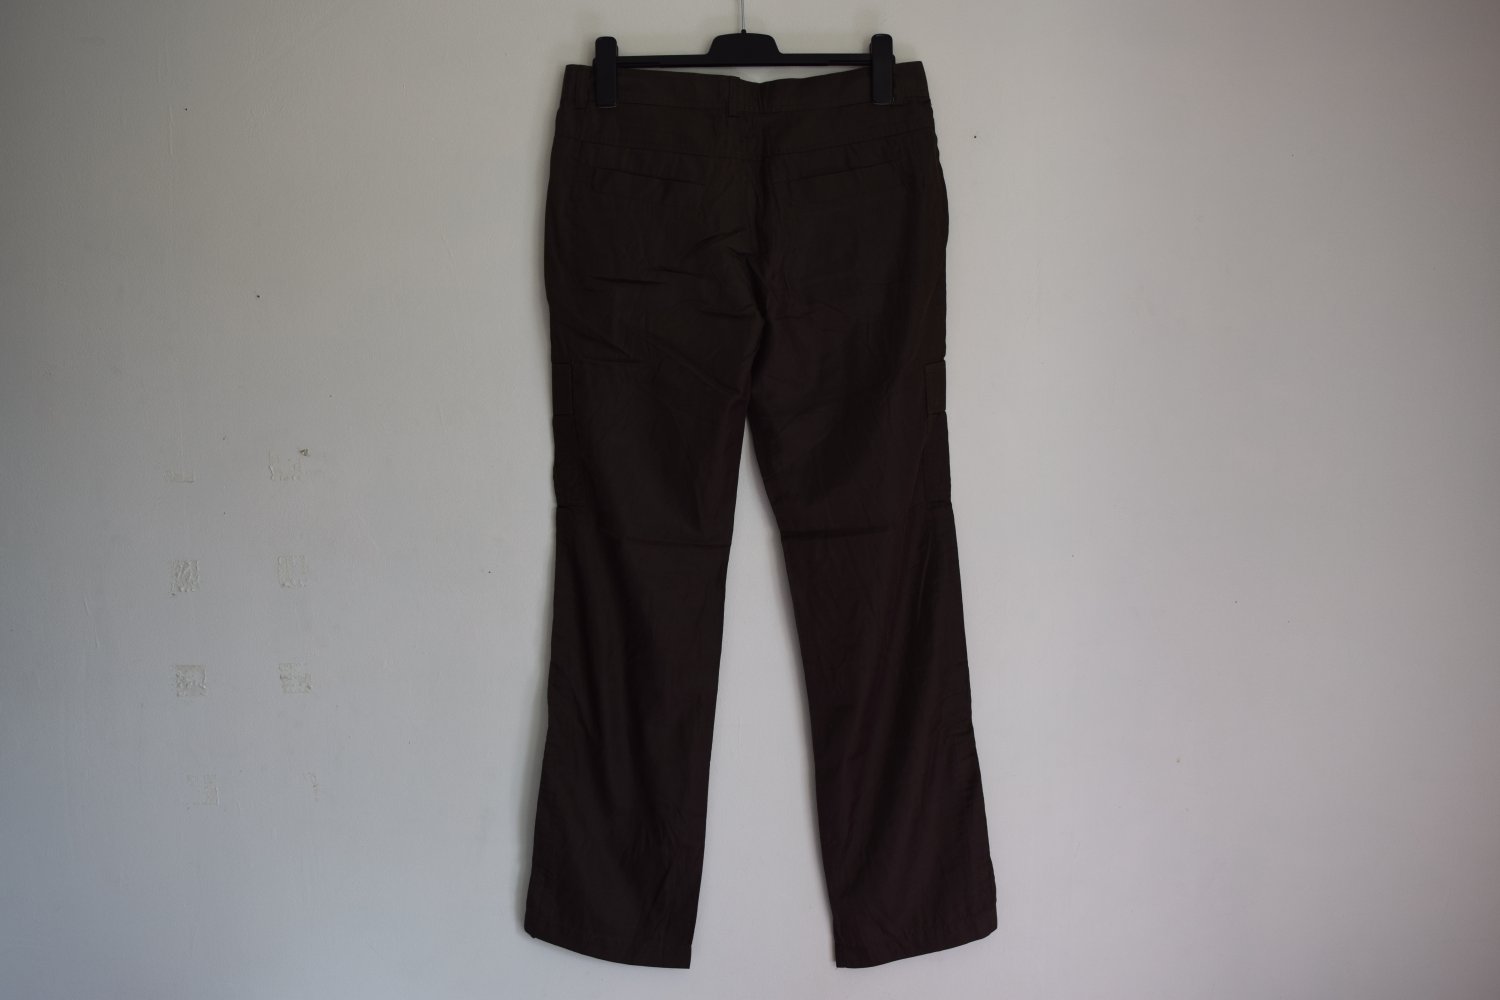 Mexx summer pants size US 8 UK 10